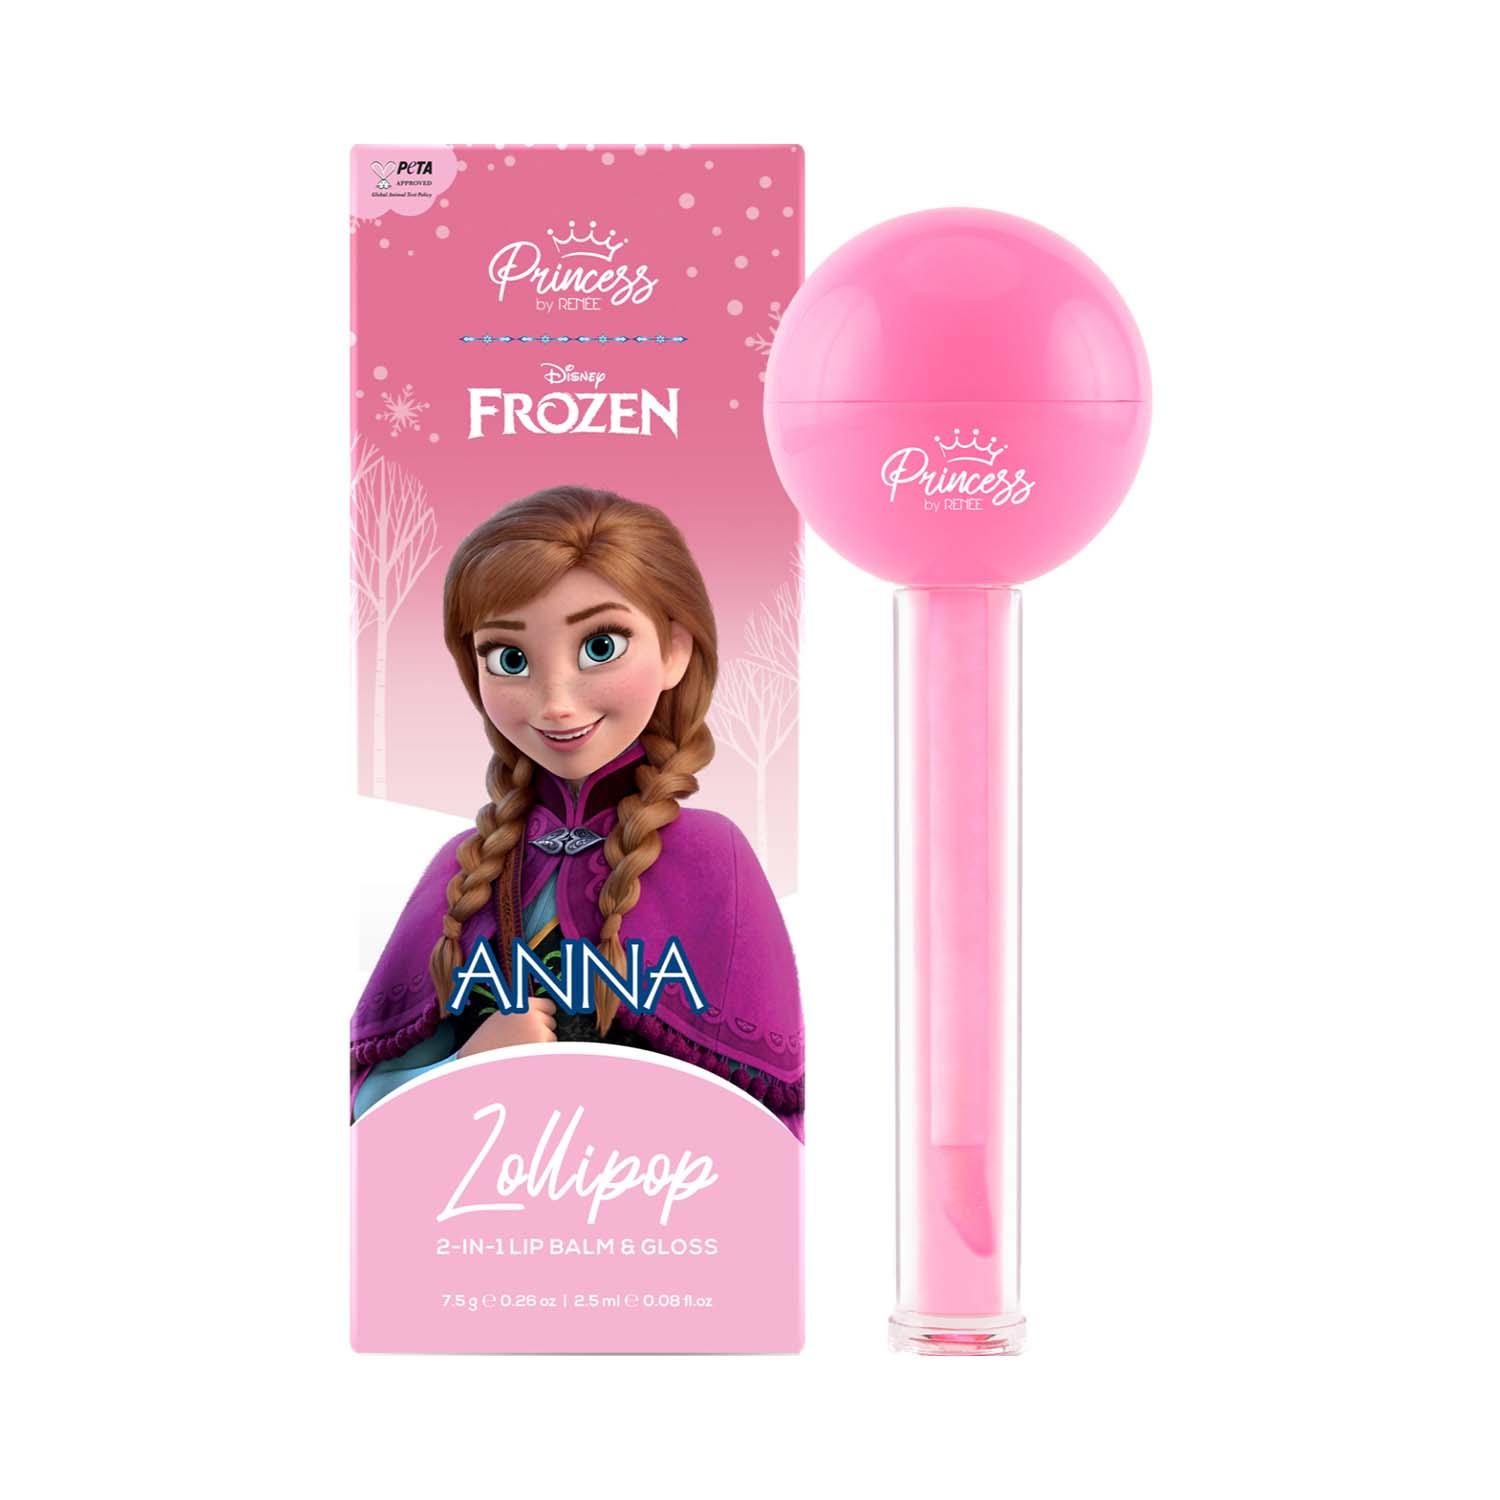 RENEE | Disney Frozen Princess By RENEE Lollipop 2-In-1 Lip Balm and Gloss (7.5 g)